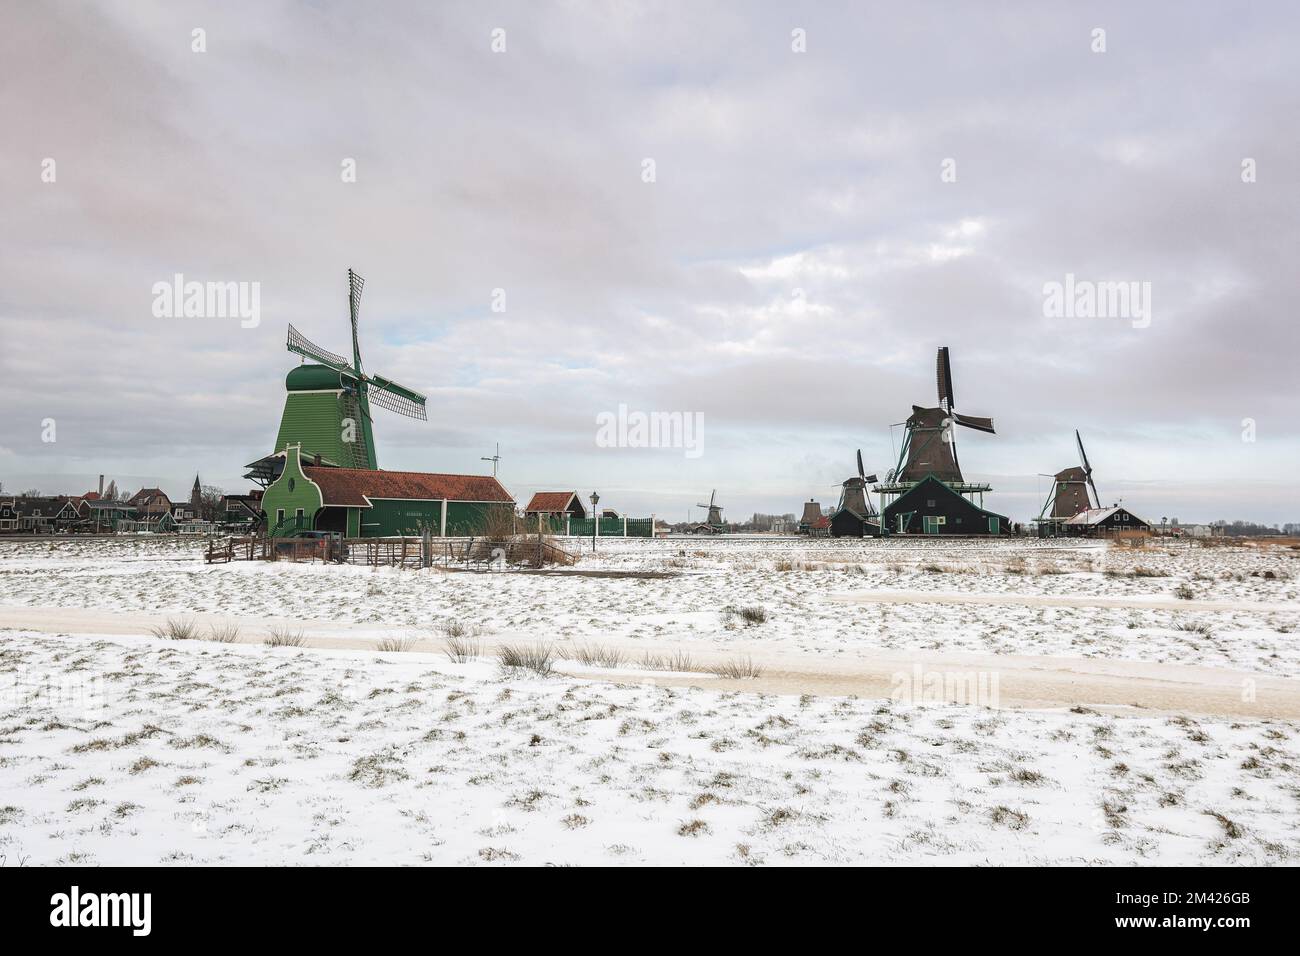 Zaandam, Netherlands, February 10, 2021:View of traditional Dutch windmills in the small village of Zaanse Schans in Zaandam, Netherlands. Stock Photo